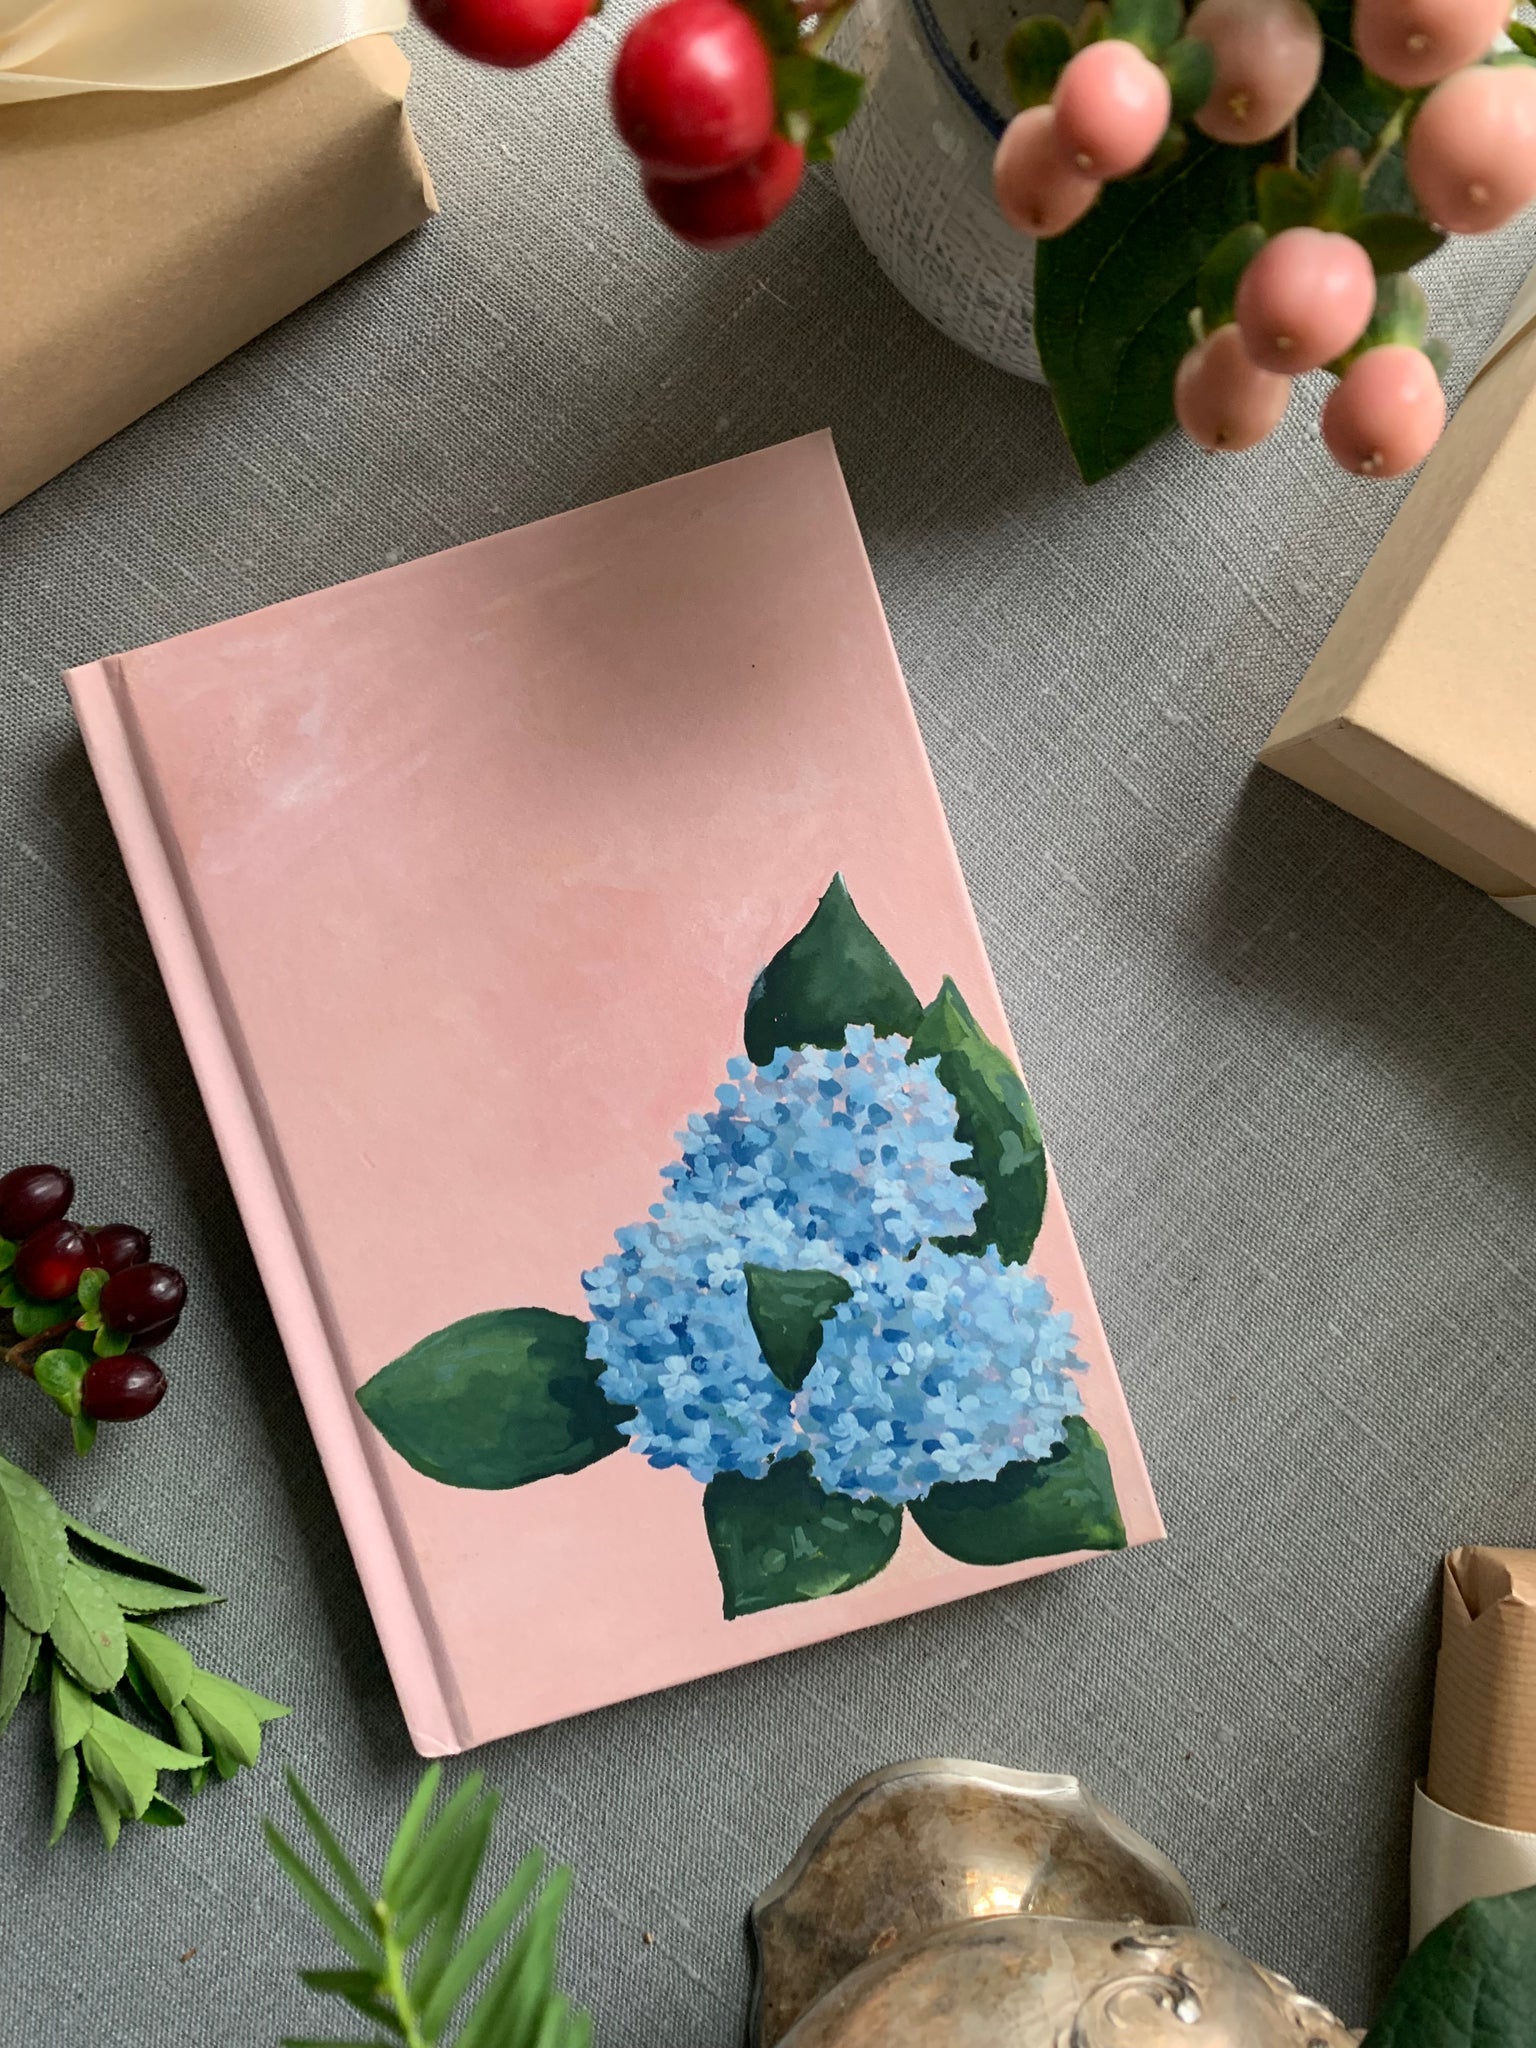 blue hydrangeas on pink hand painted blank journal